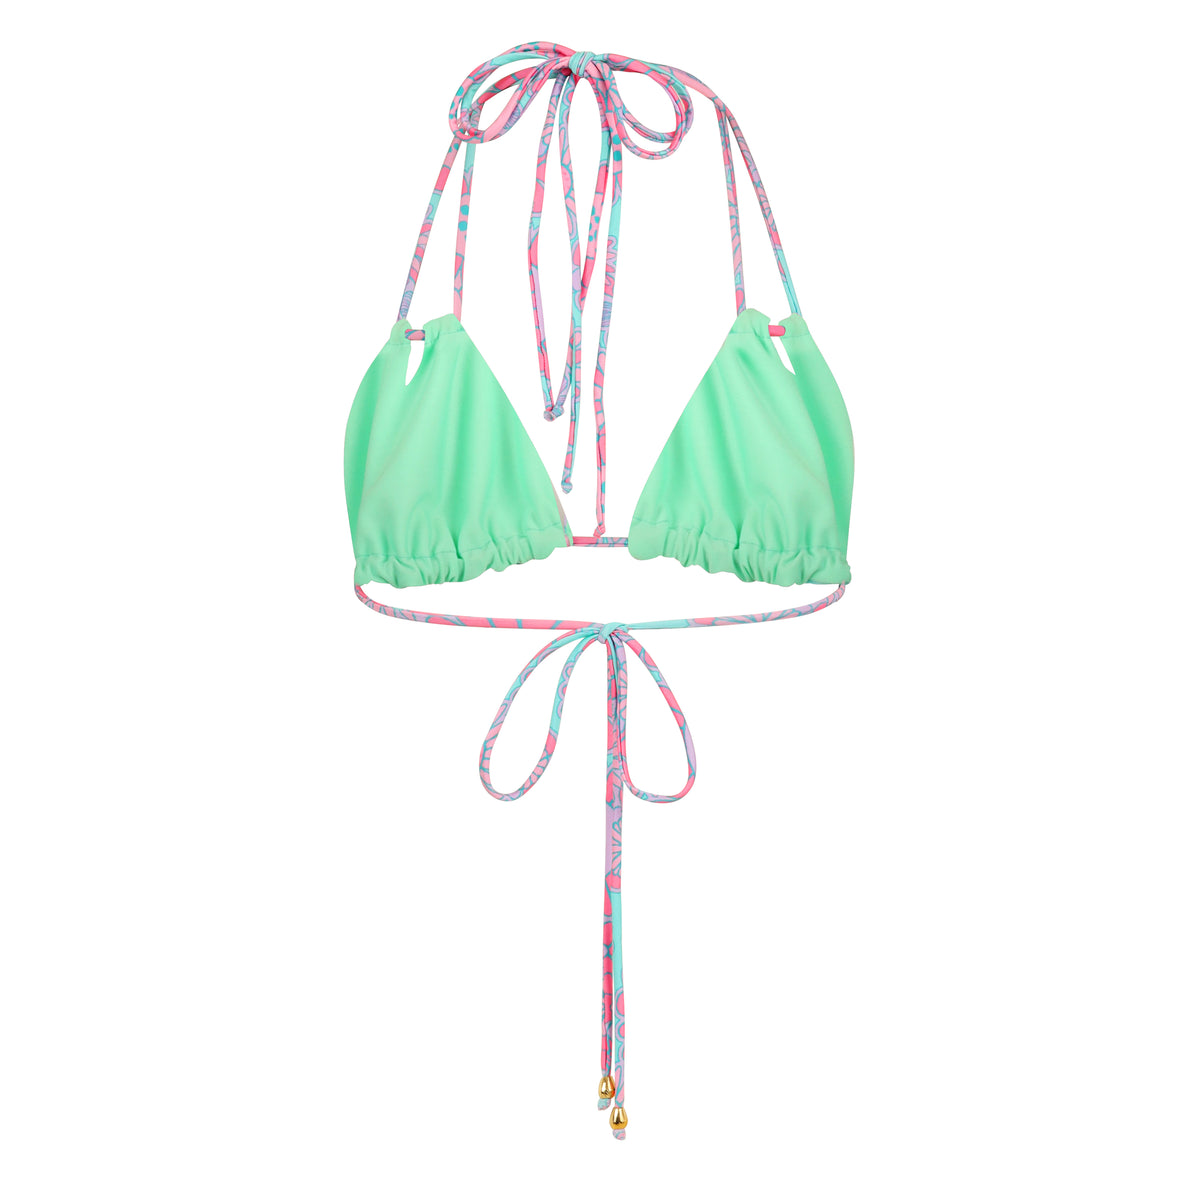 Marine Bloom - Bikini Top for Women